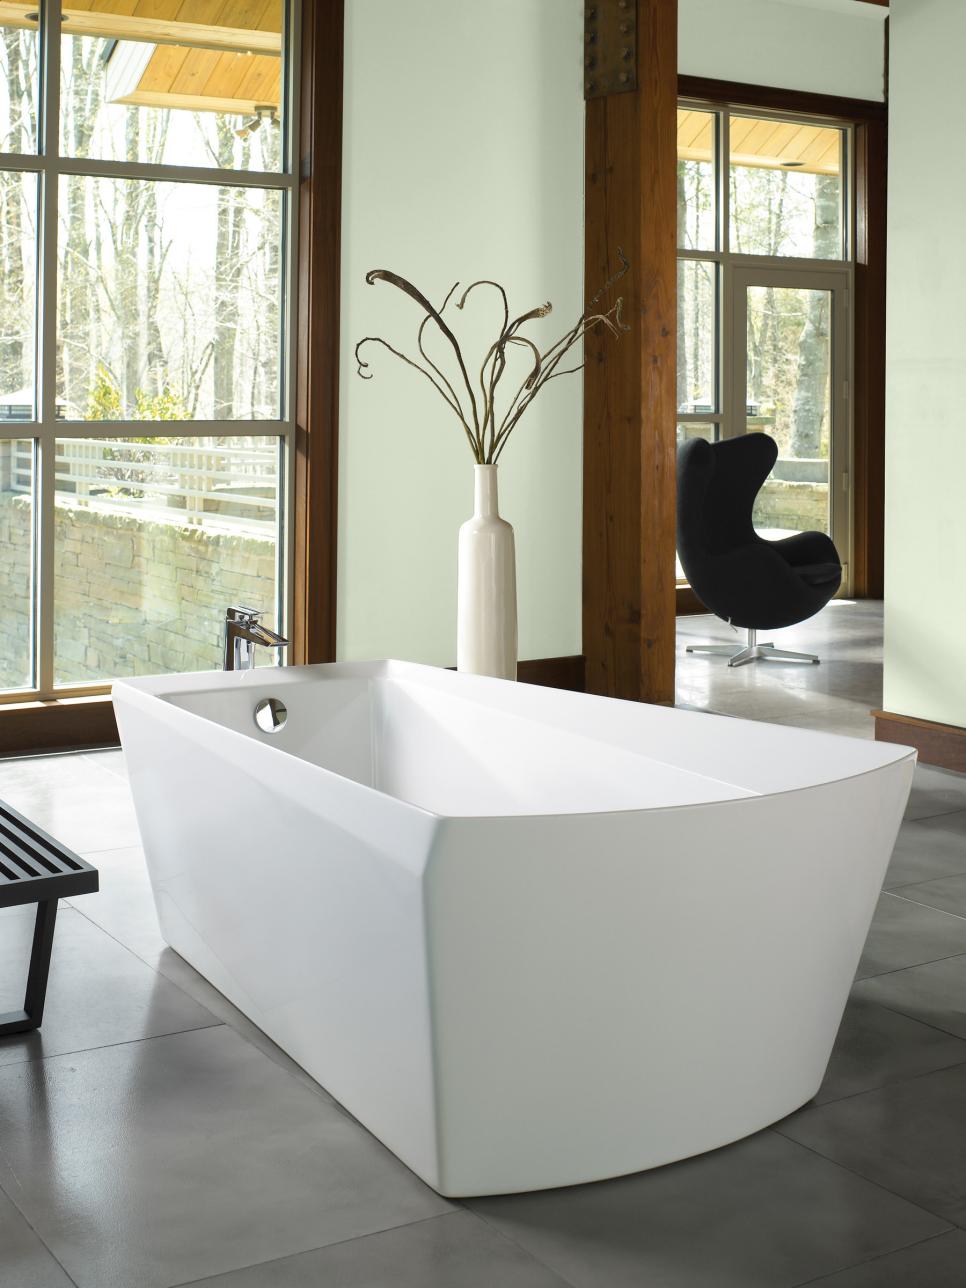 Bathtub Design Ideas | HGTV